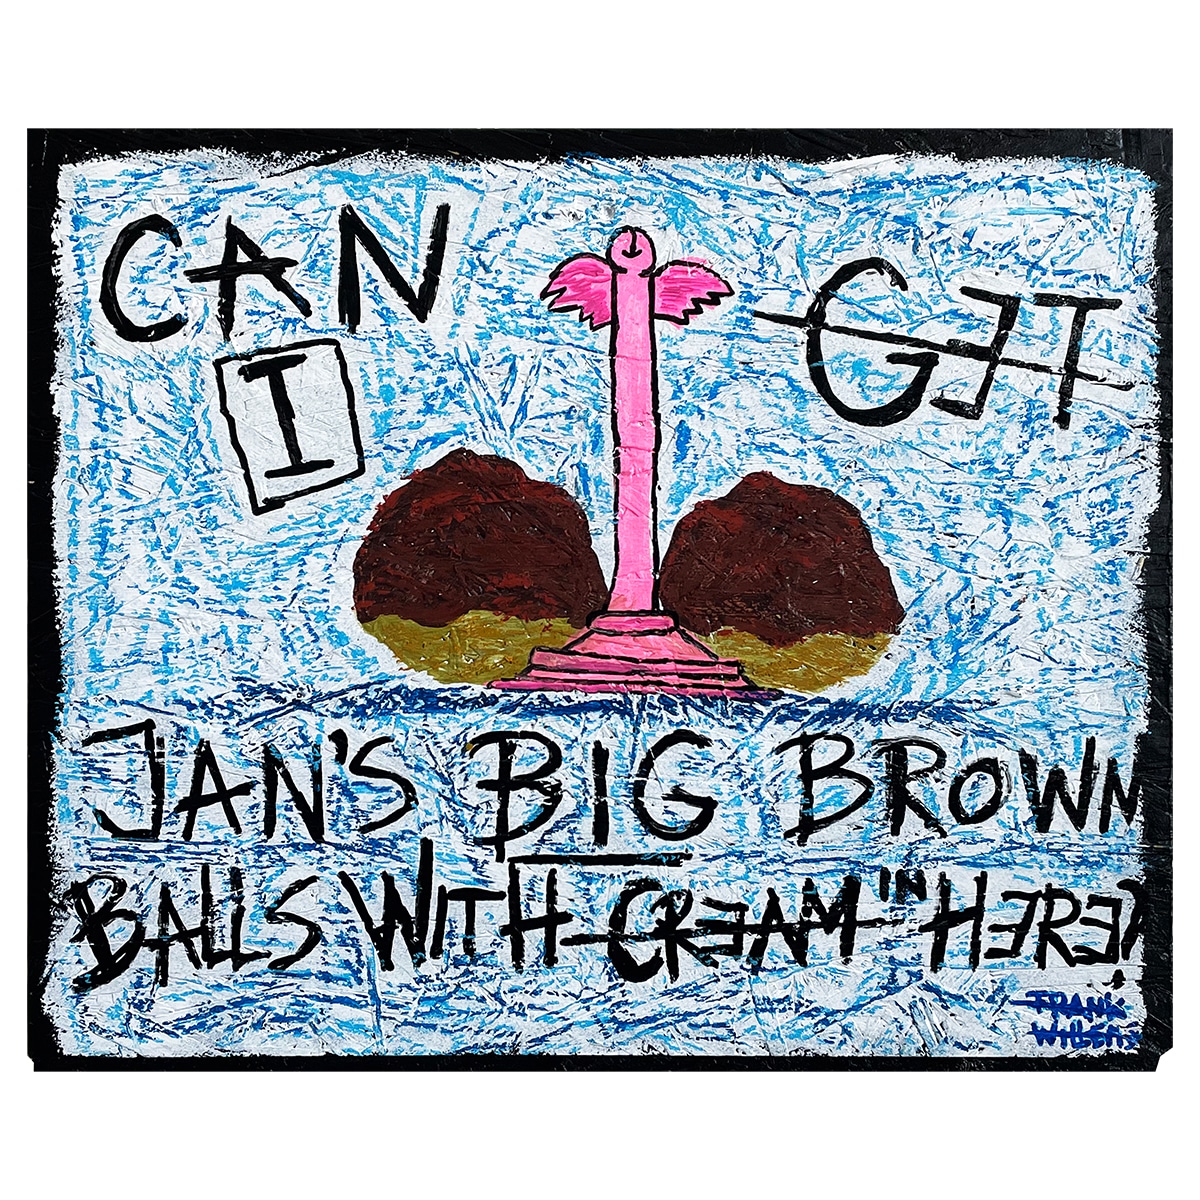 JAN'S BIG BROWN BALLS WITH CREAM - Frank Willems